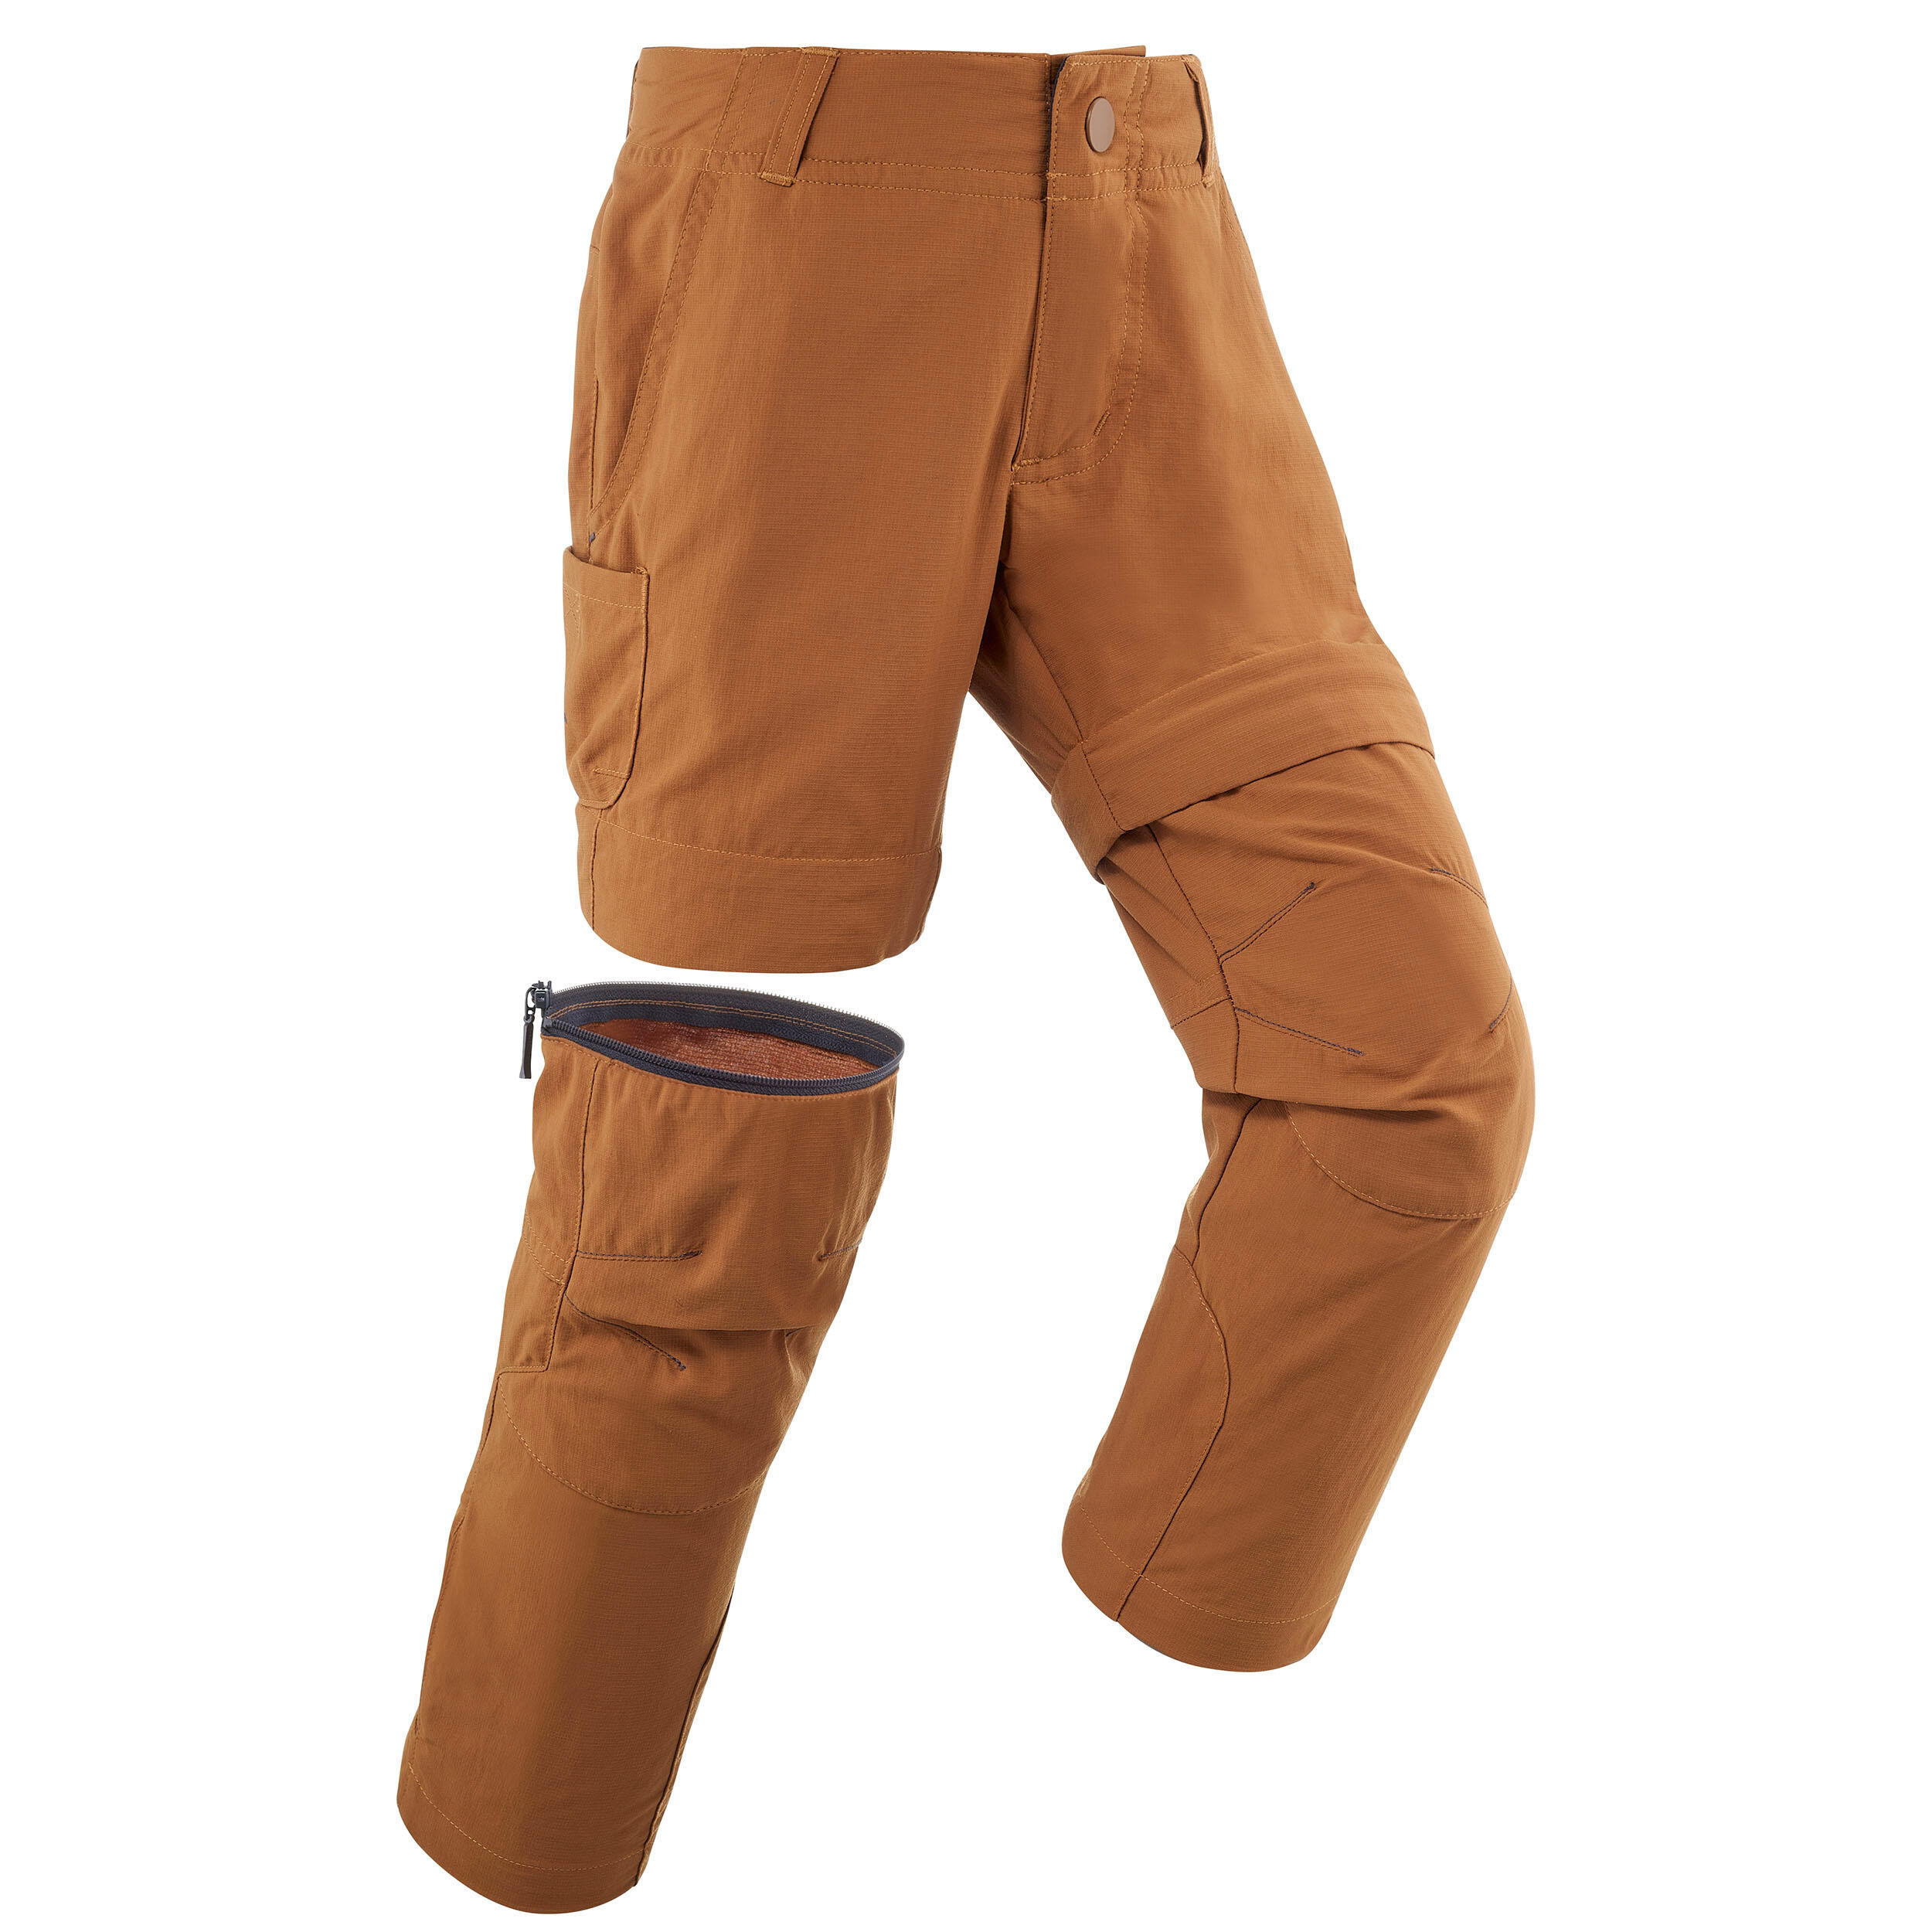 Pantalon Modulabil Drumeție la munte MH500 Maro Copii 2-6 ani decathlon.ro  Imbracaminte trekking si drumetie